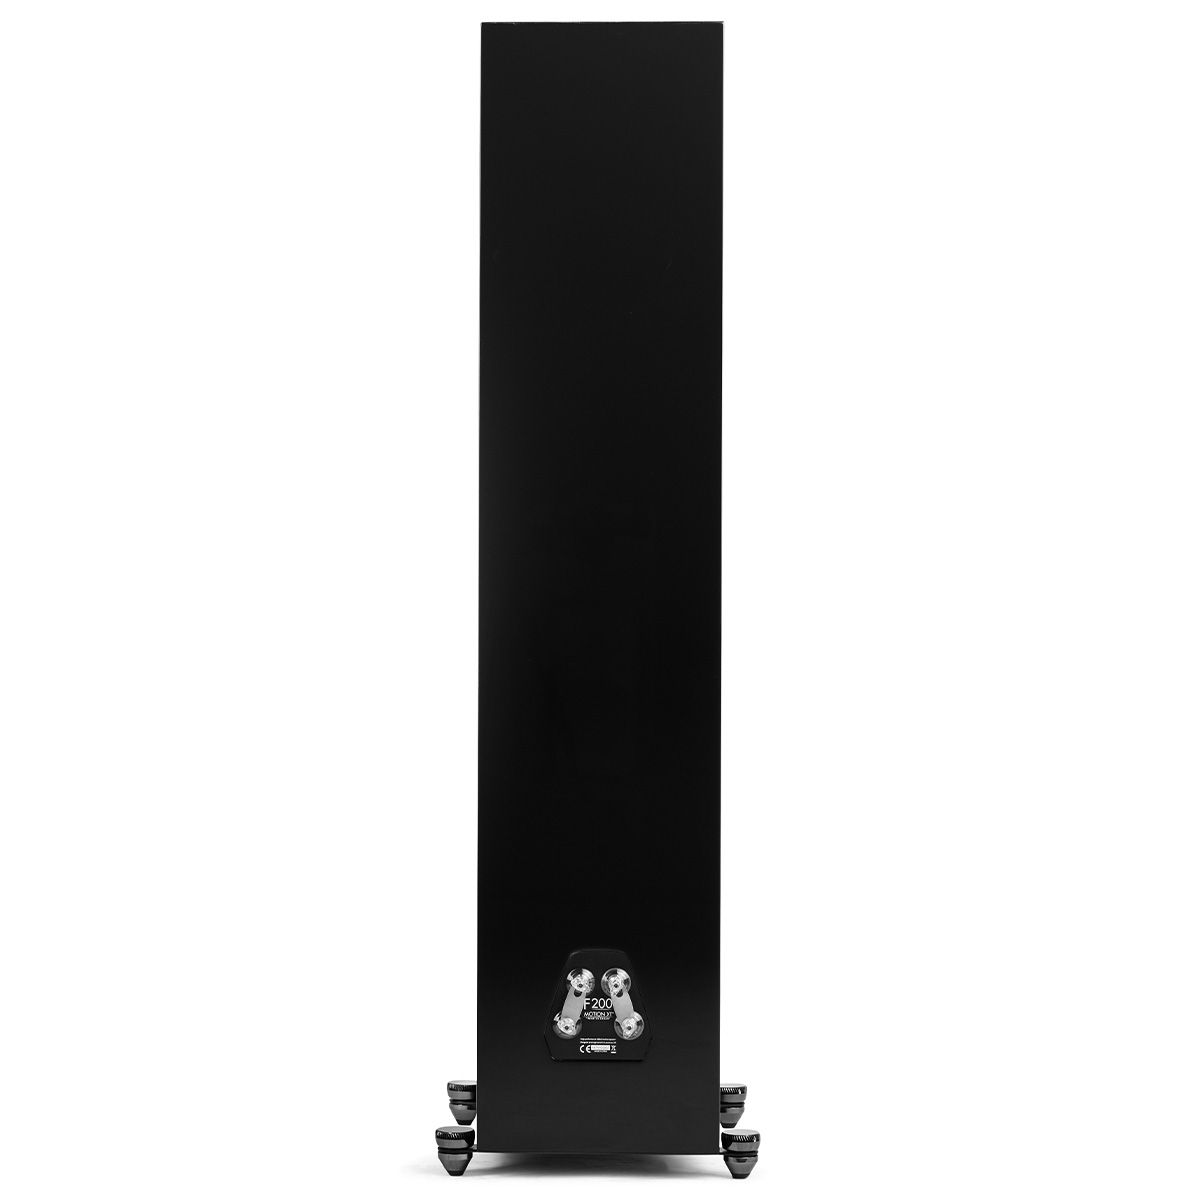 MartinLogan Motion XT F200  Floorstanding Speaker in black, rear view 